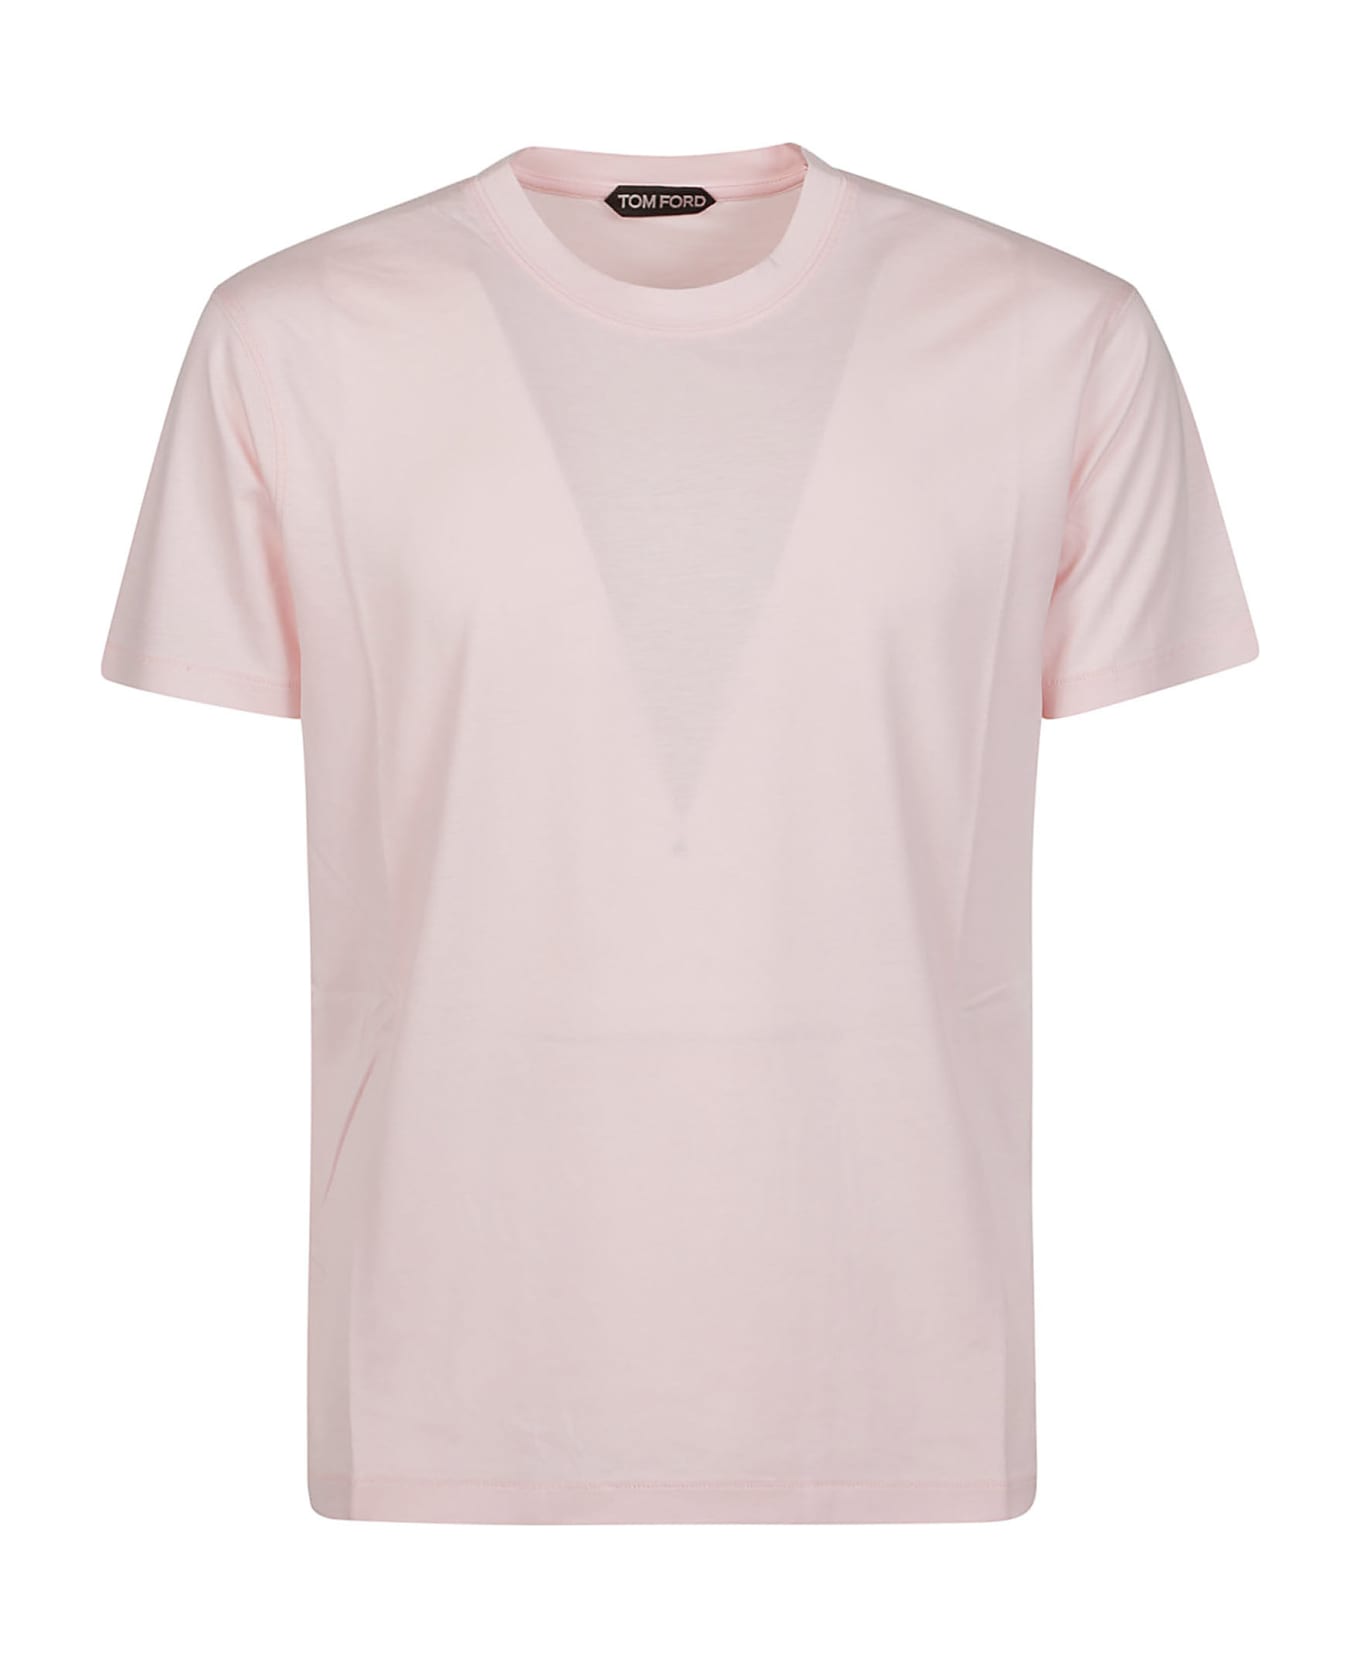 Tom Ford T-shirt - Light Pink